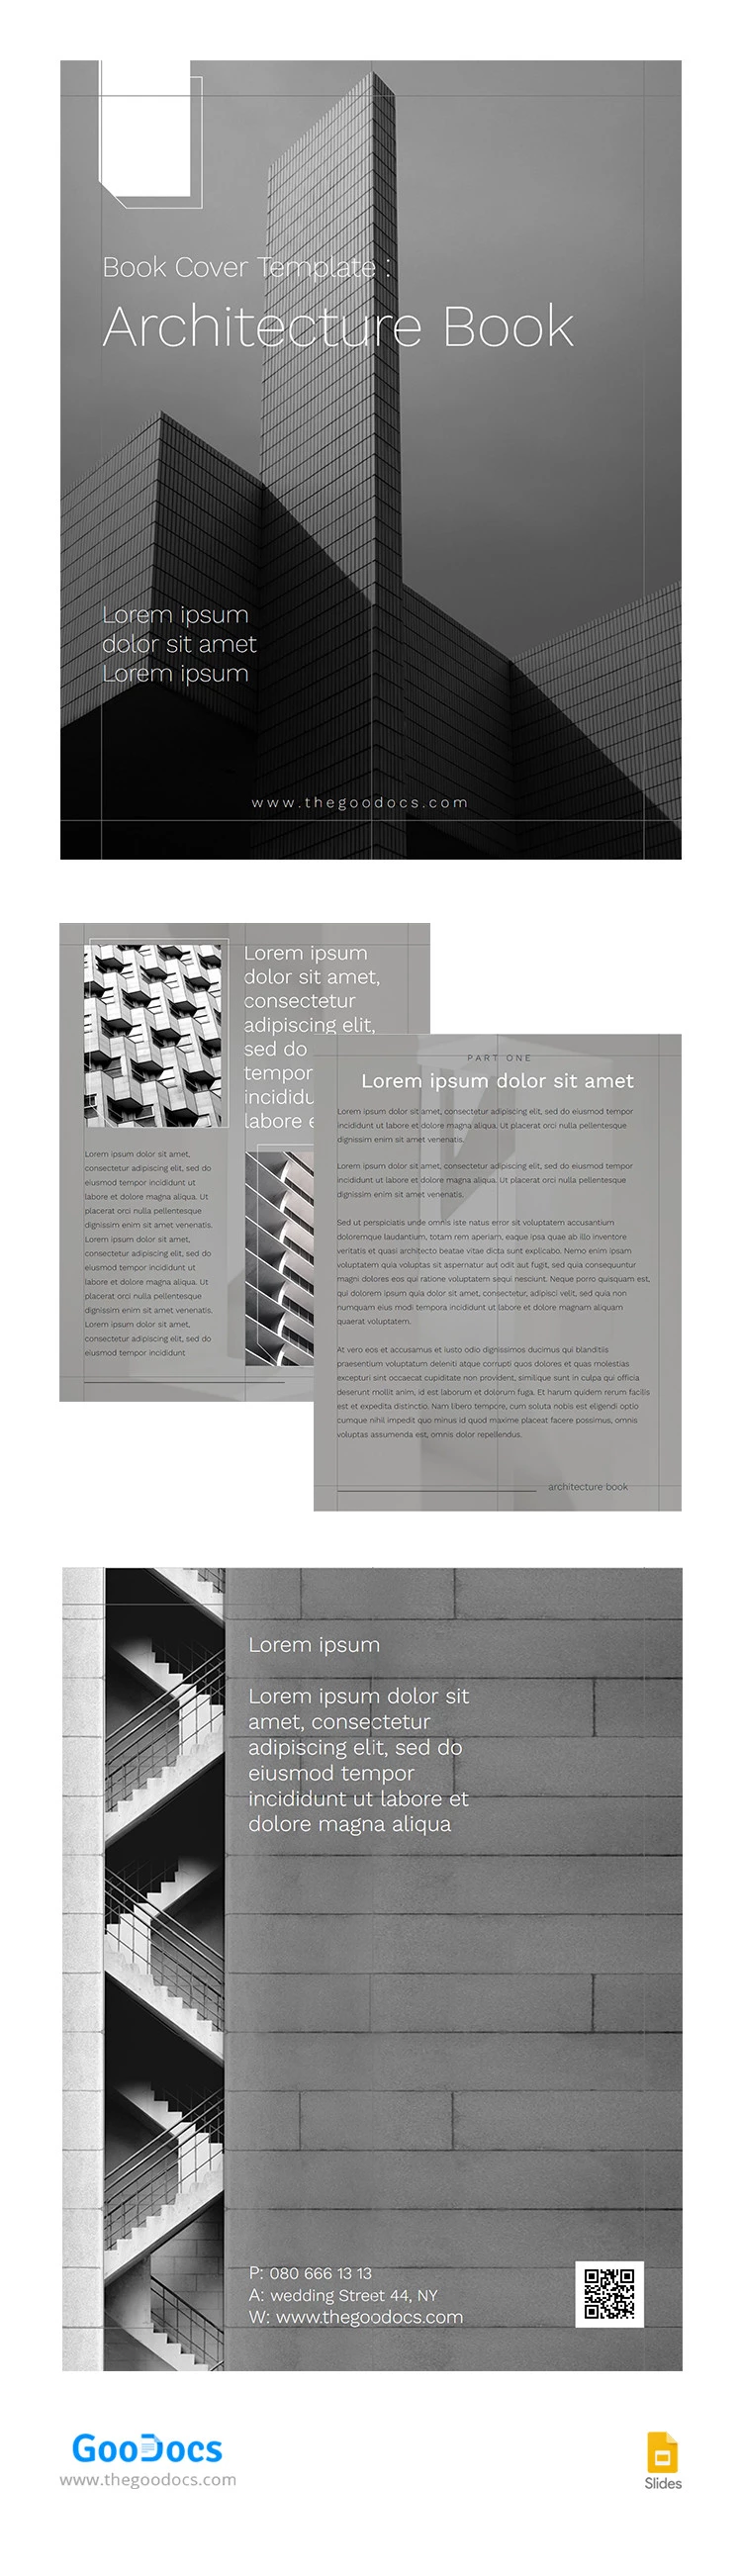 Libro de Arquitectura Elegante en Gris - free Google Docs Template - 10065665